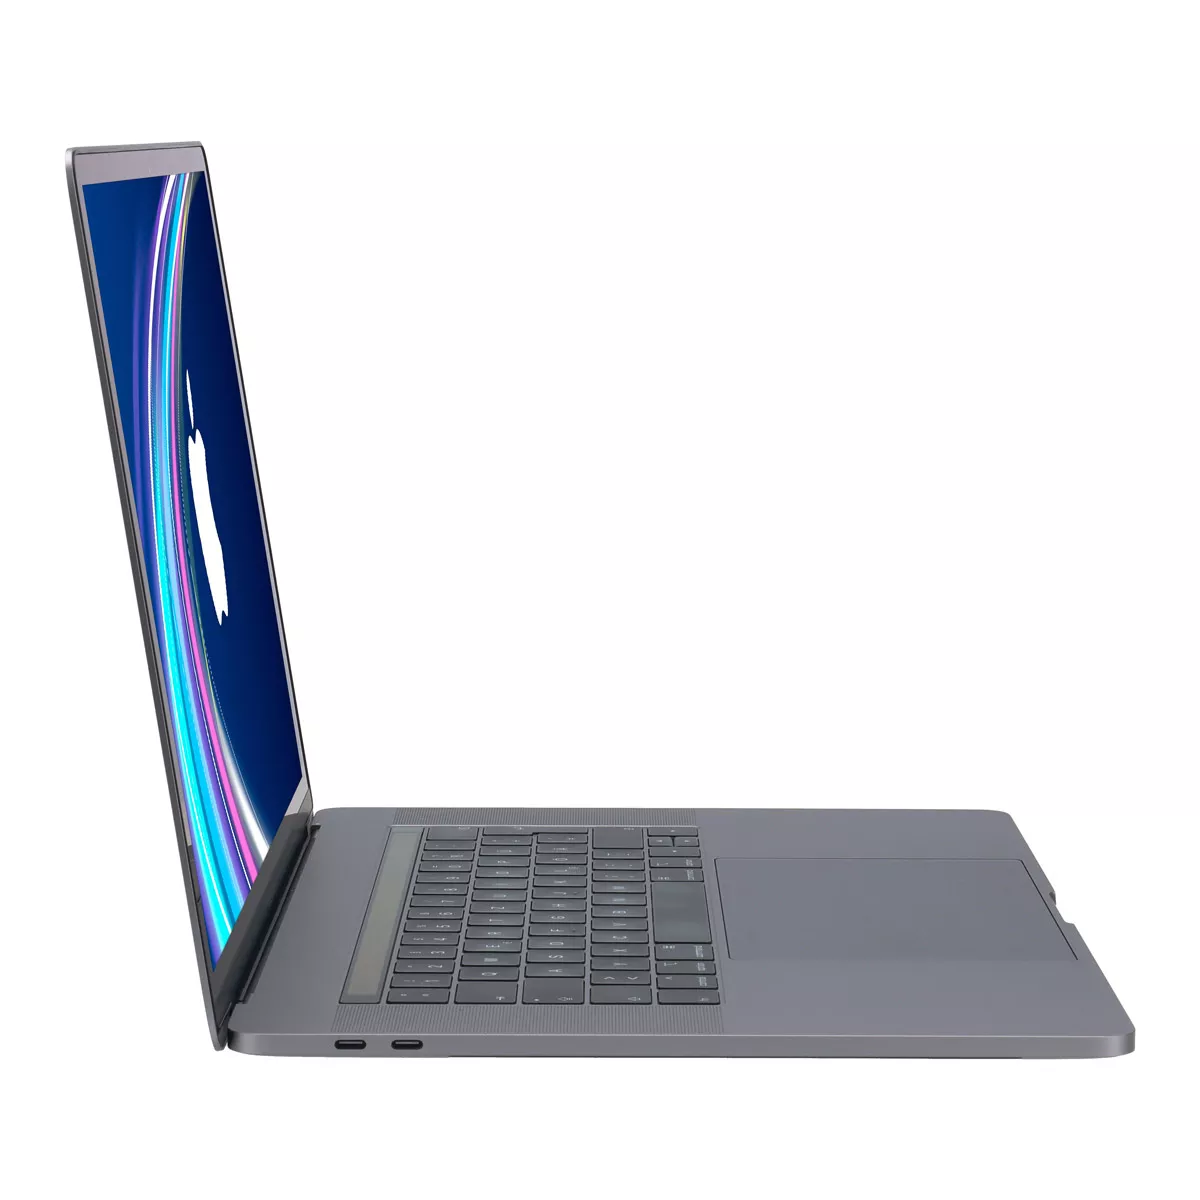 Apple MacBook Pro 15" 2019 Core i7 8750H 16 GB 500 GB SSD Webcam B